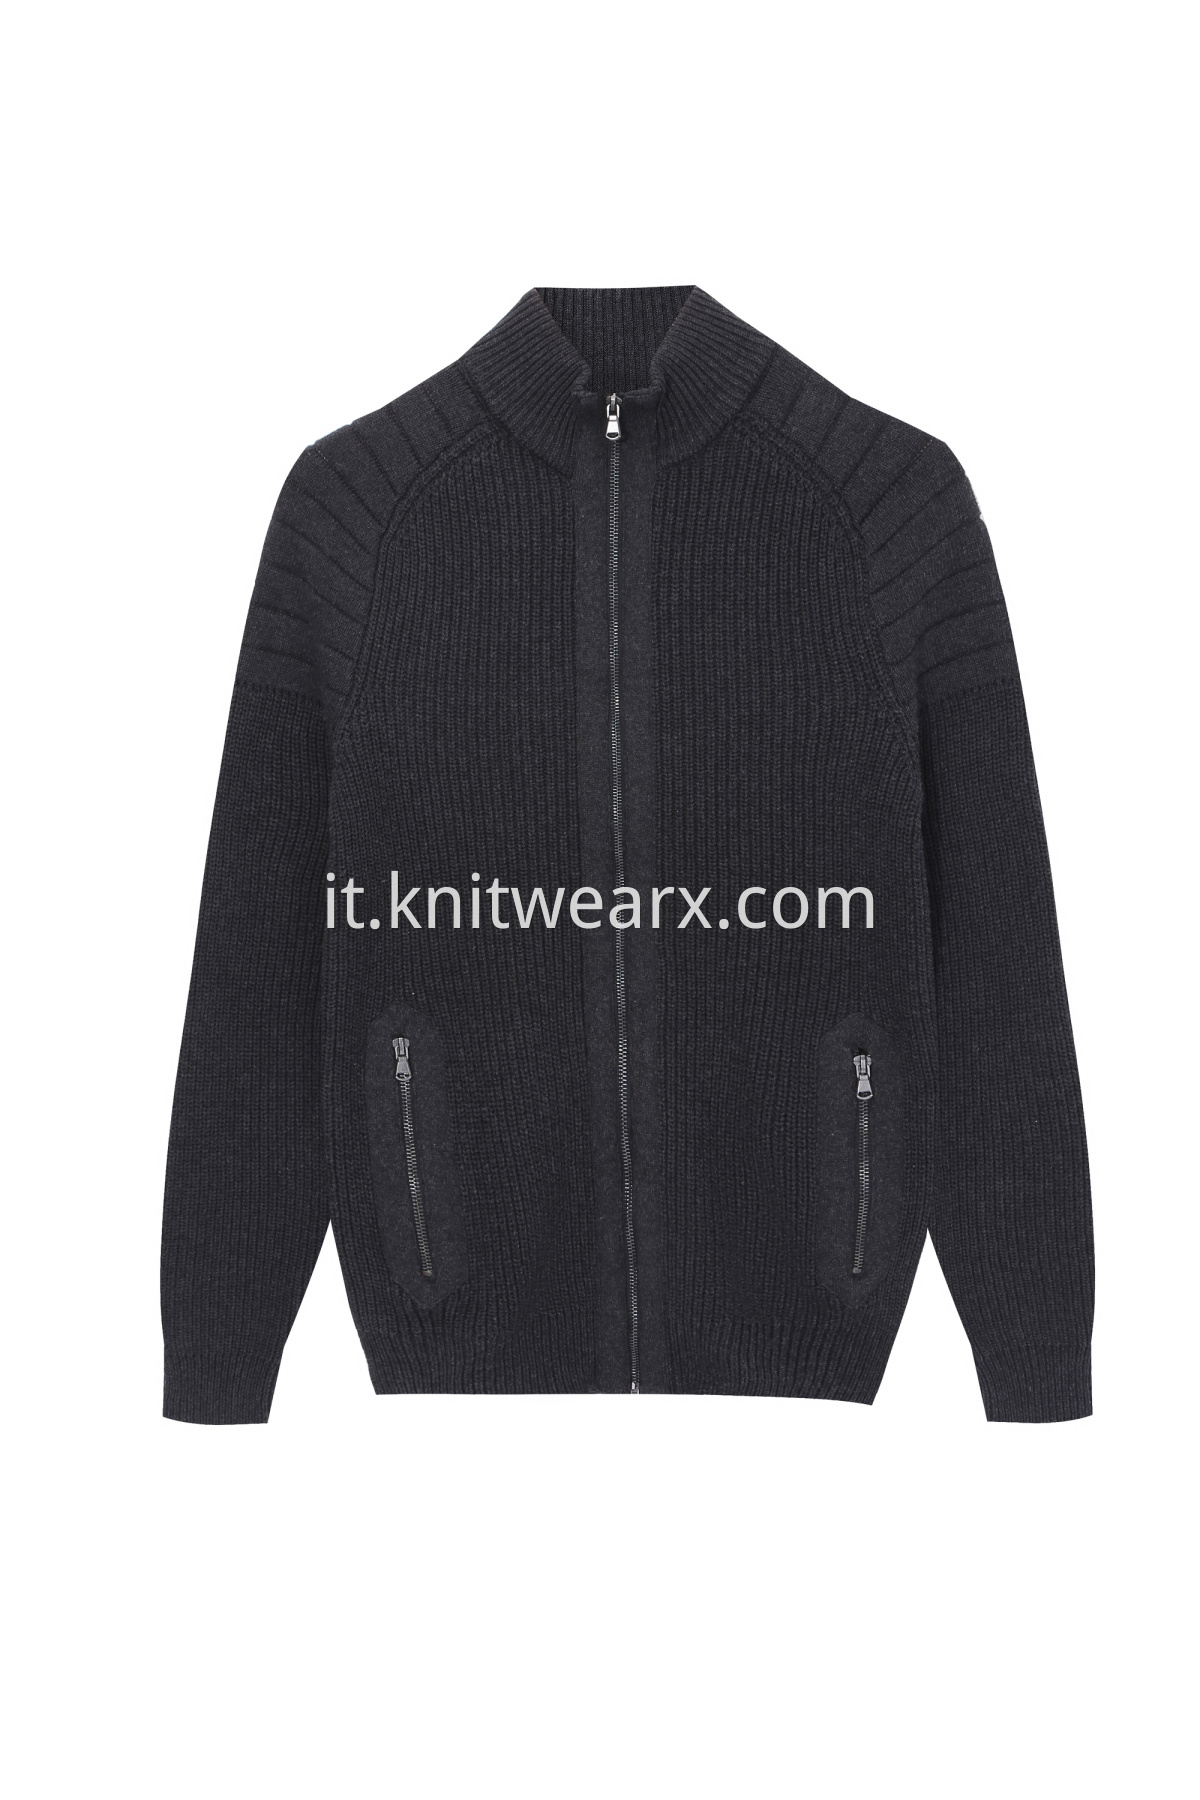 Men's Cotton Rib Knitted Full Zip Cardigan Sweater Jacket